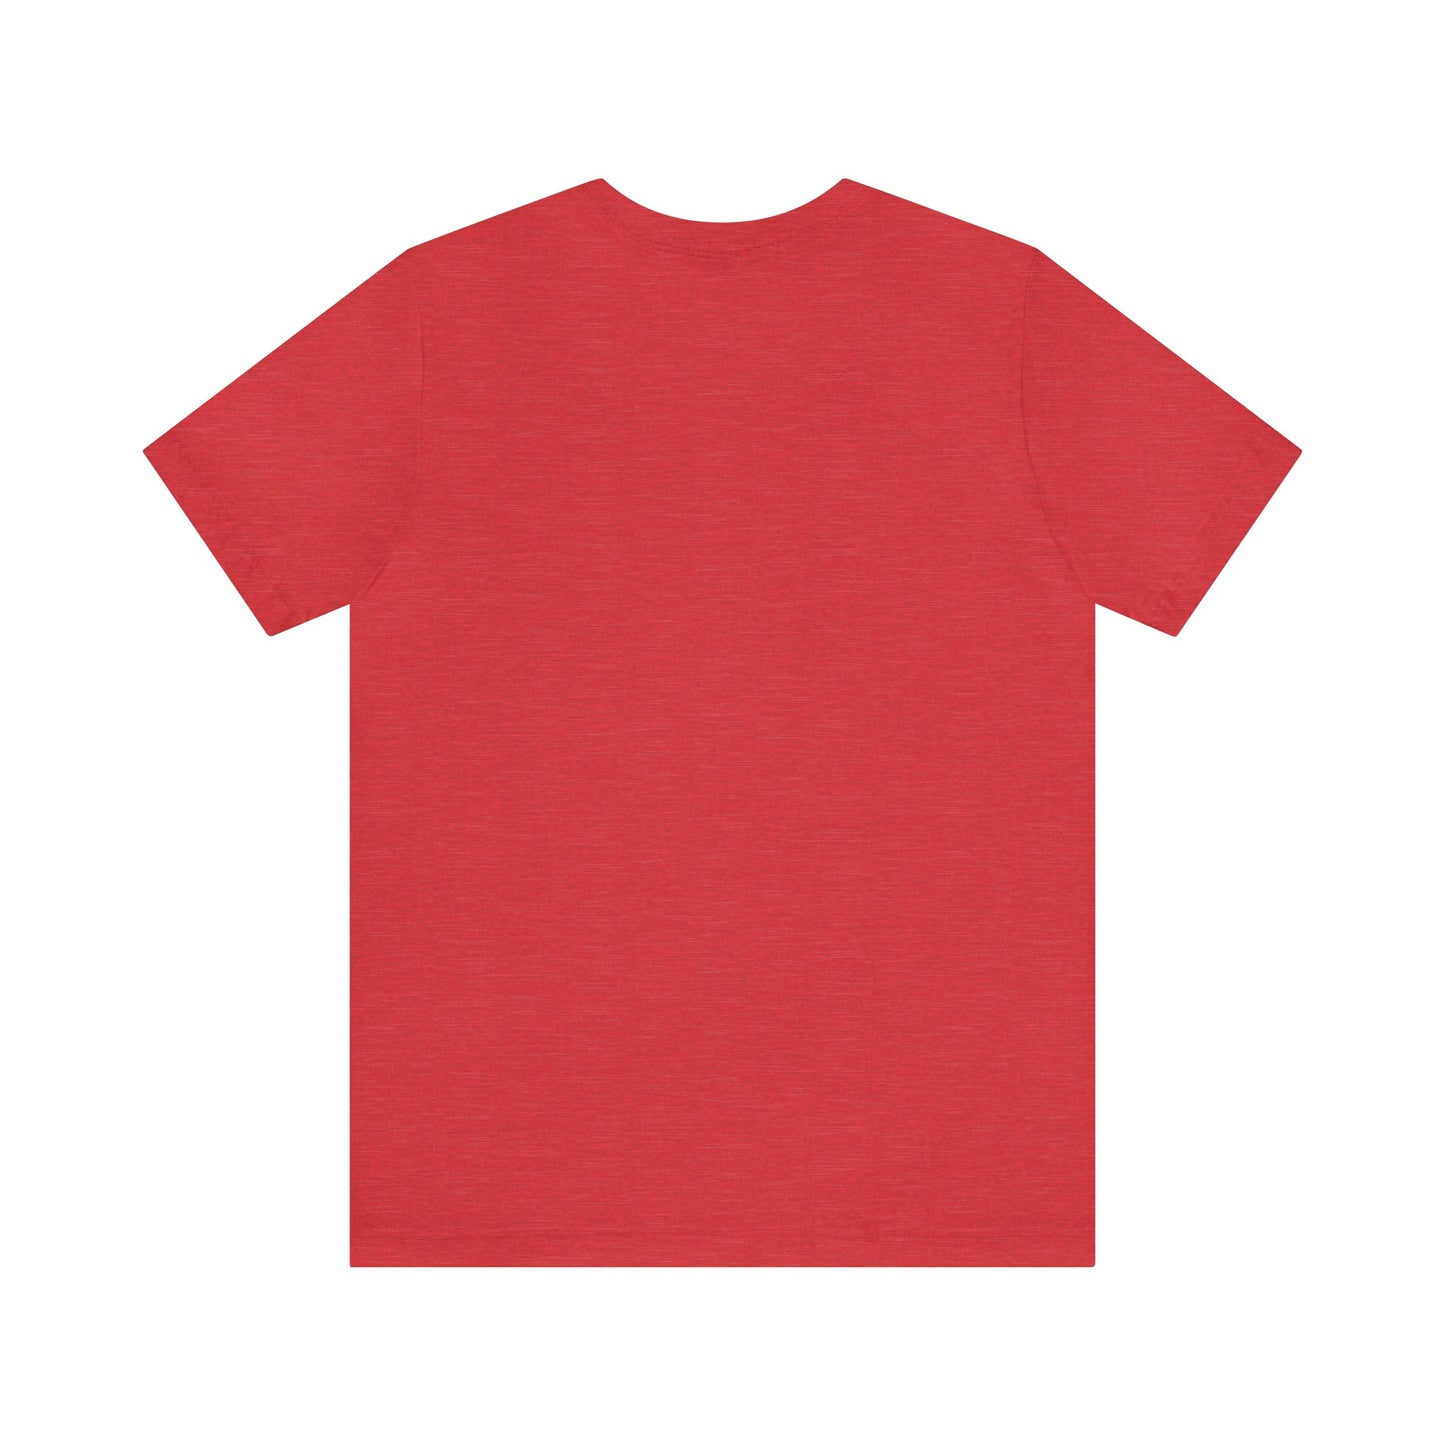 Måneskin Circular Group Photo Unisex Jersey Short Sleeve Tee Shirt